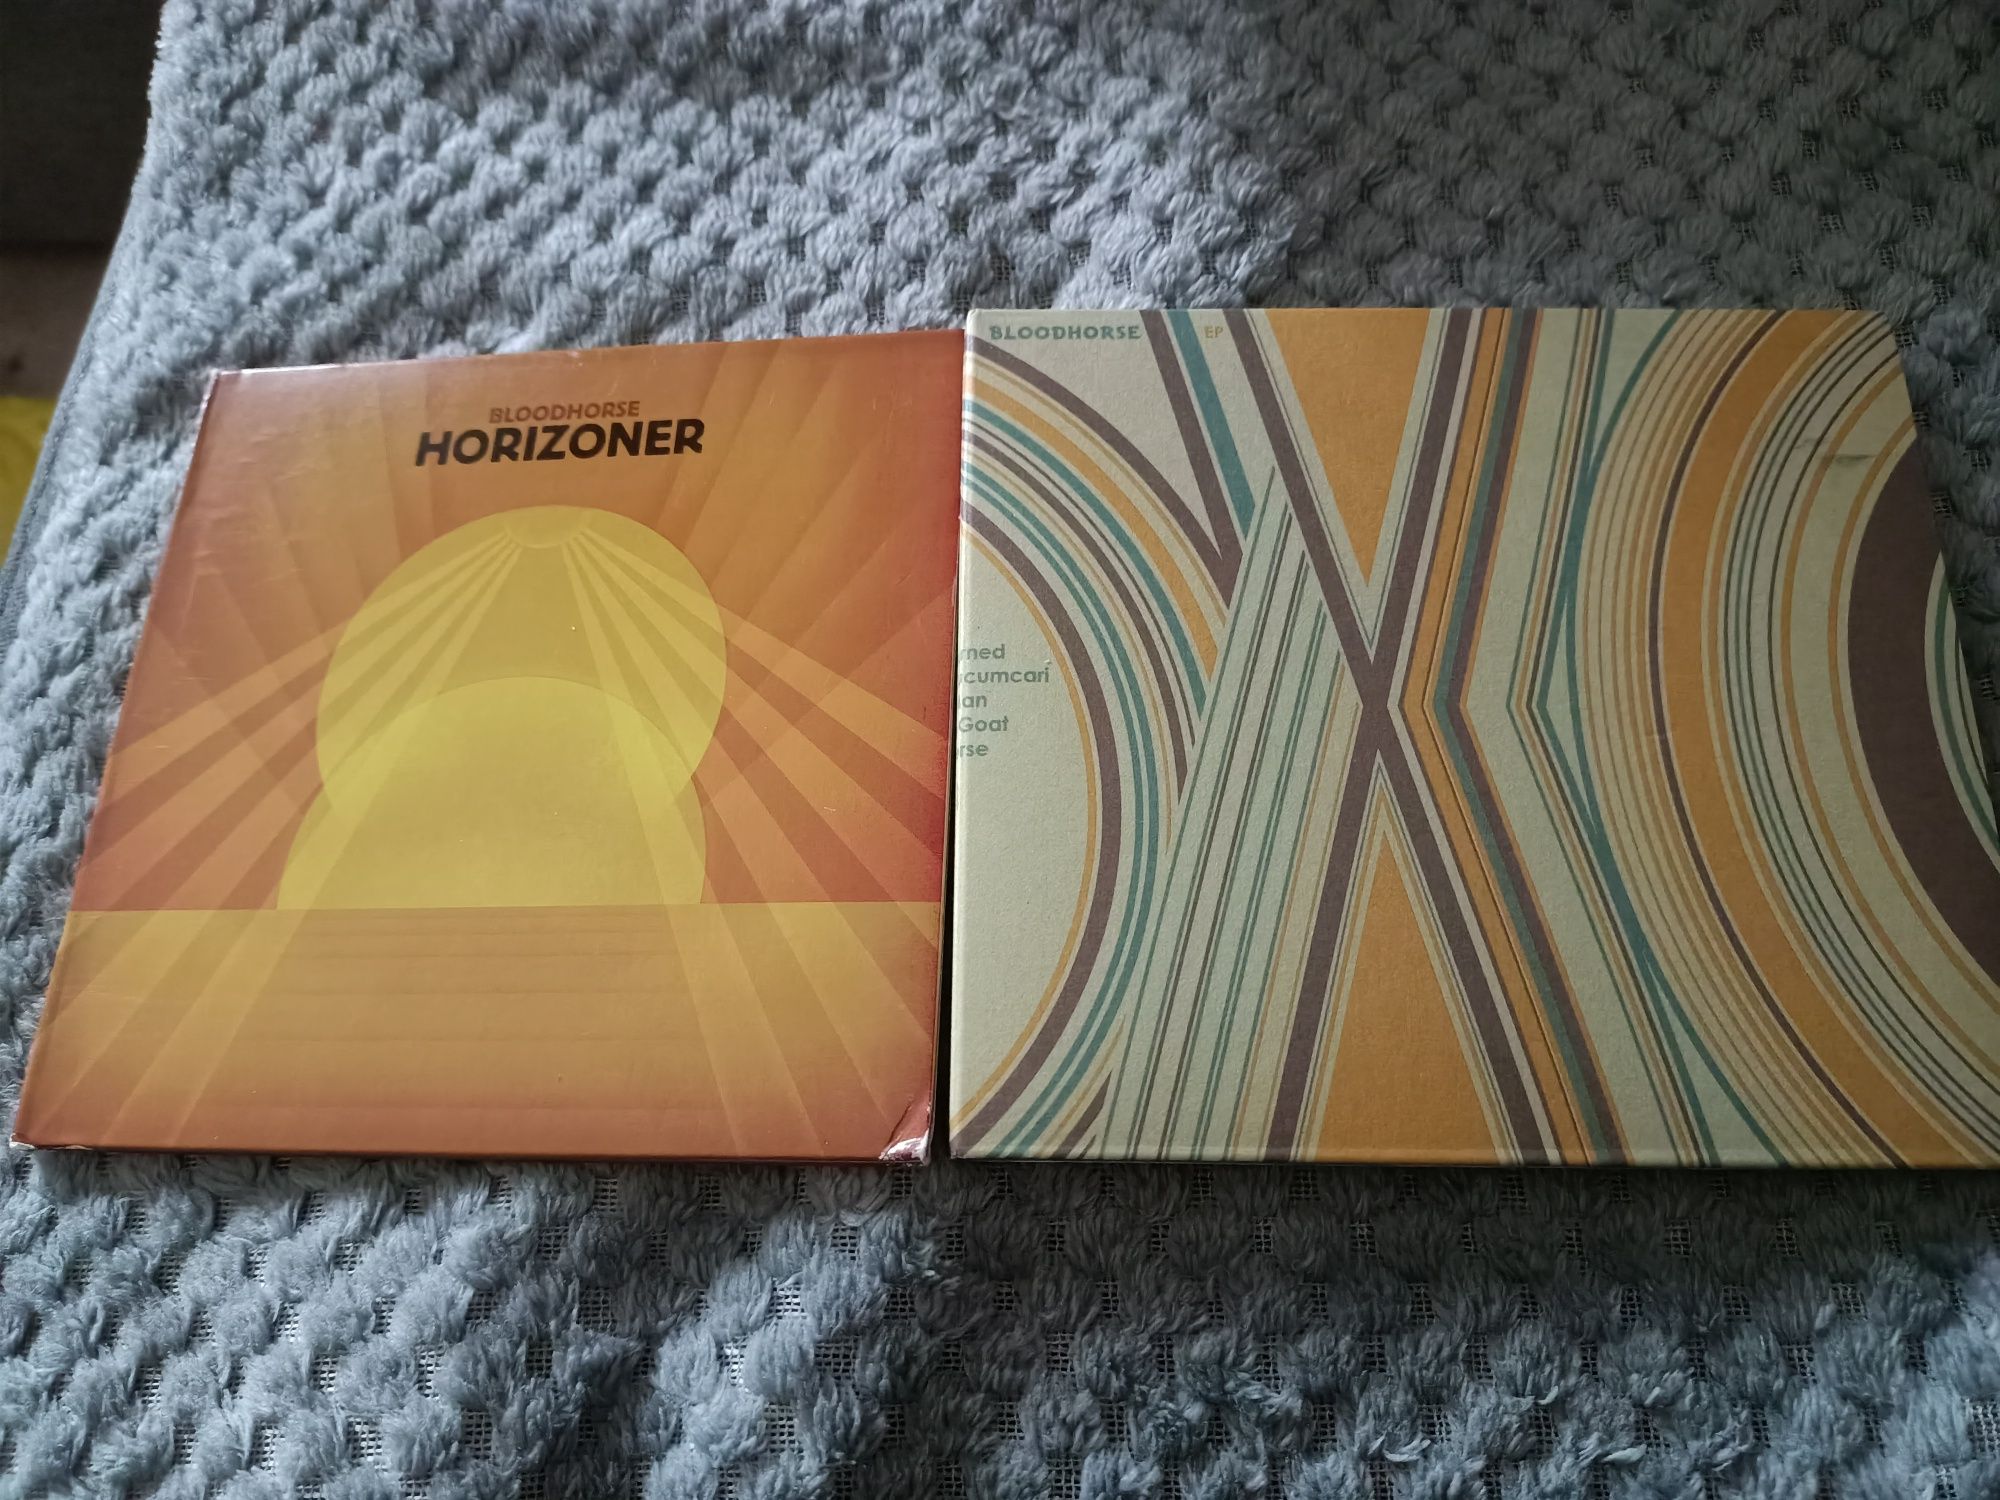 Bloodhorse x 2 CD